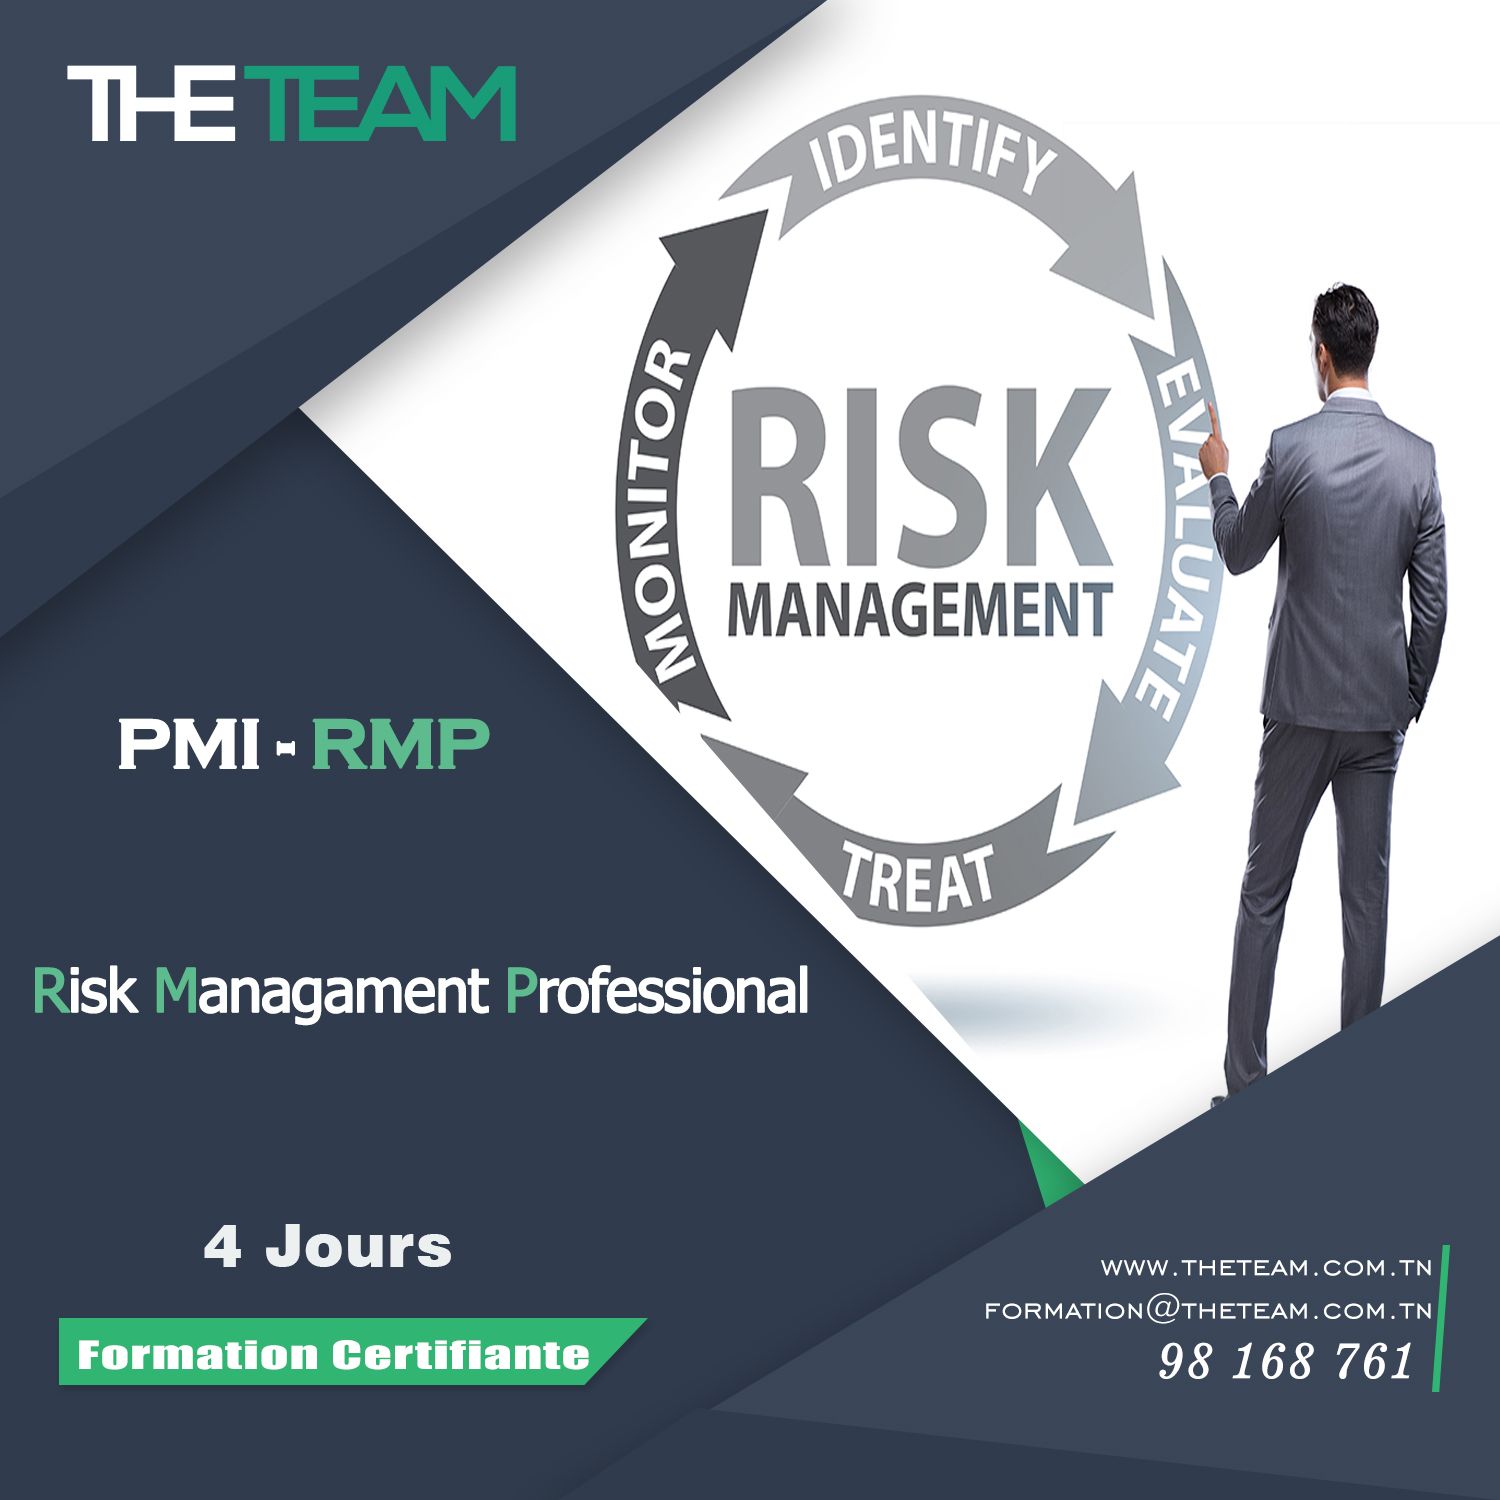 THE TEAM - RMP Risk Management Professional PMI-RMP